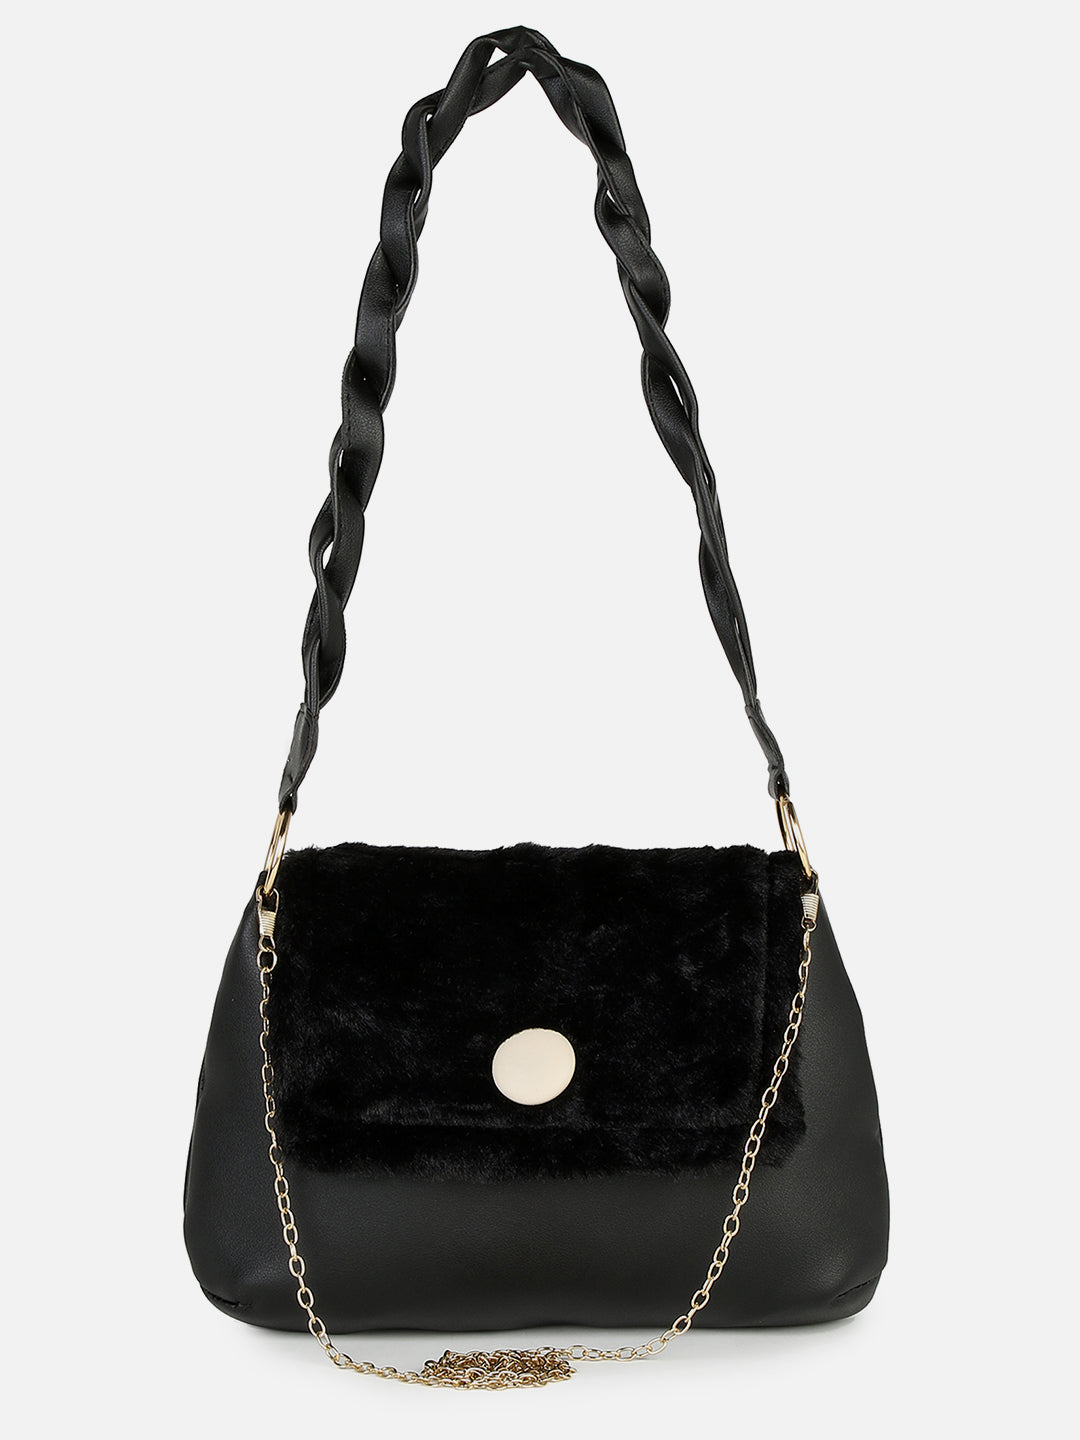 Veronica Black Mini Bag